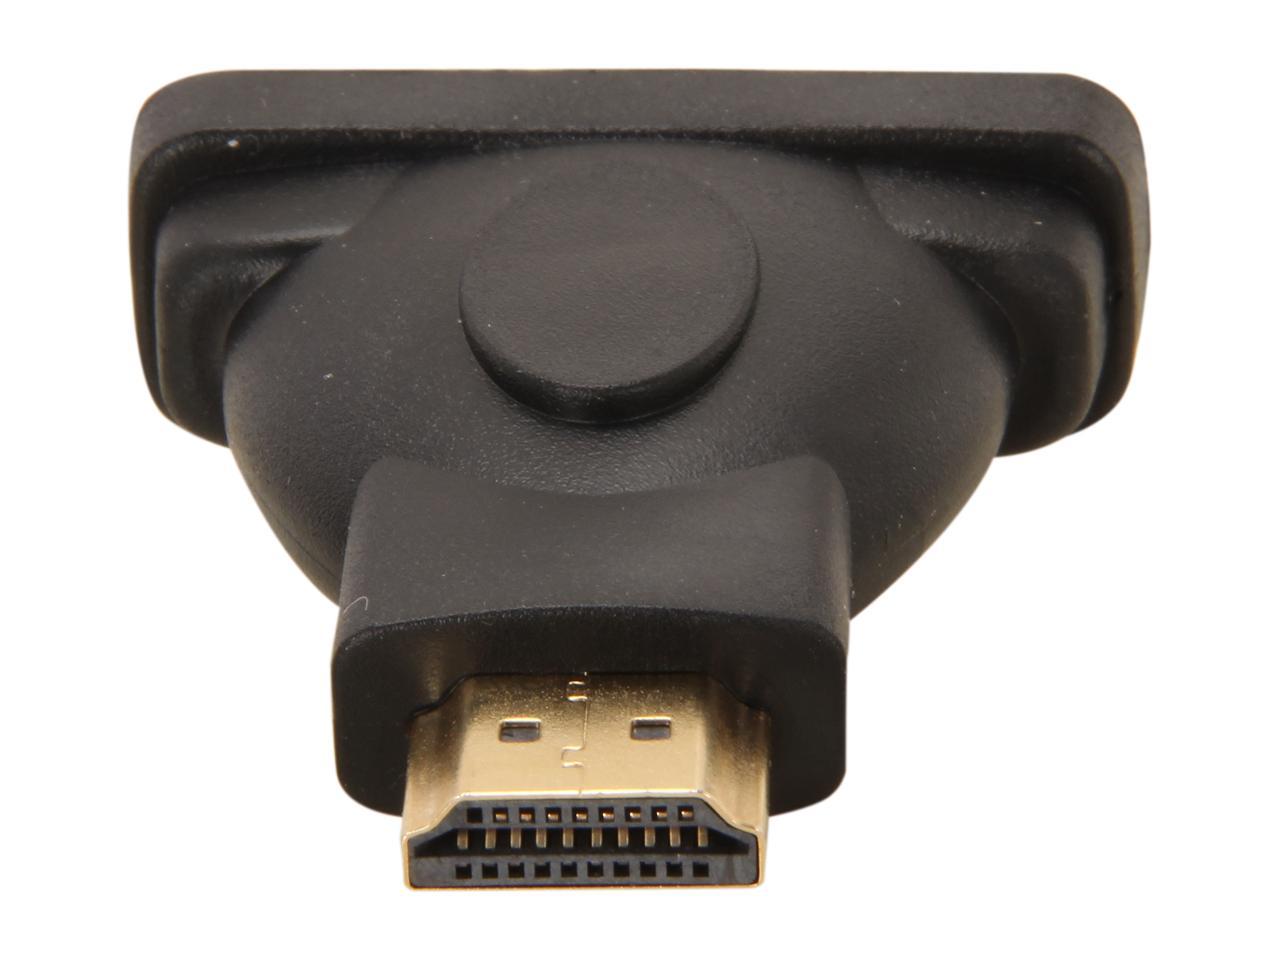 StarTech HDMIDVIMF HDMI to DVI-D Video Cable Adapter - 1 x HDMI (M), 1 x DVI-D (F), Black - Gold-Plated Connectors